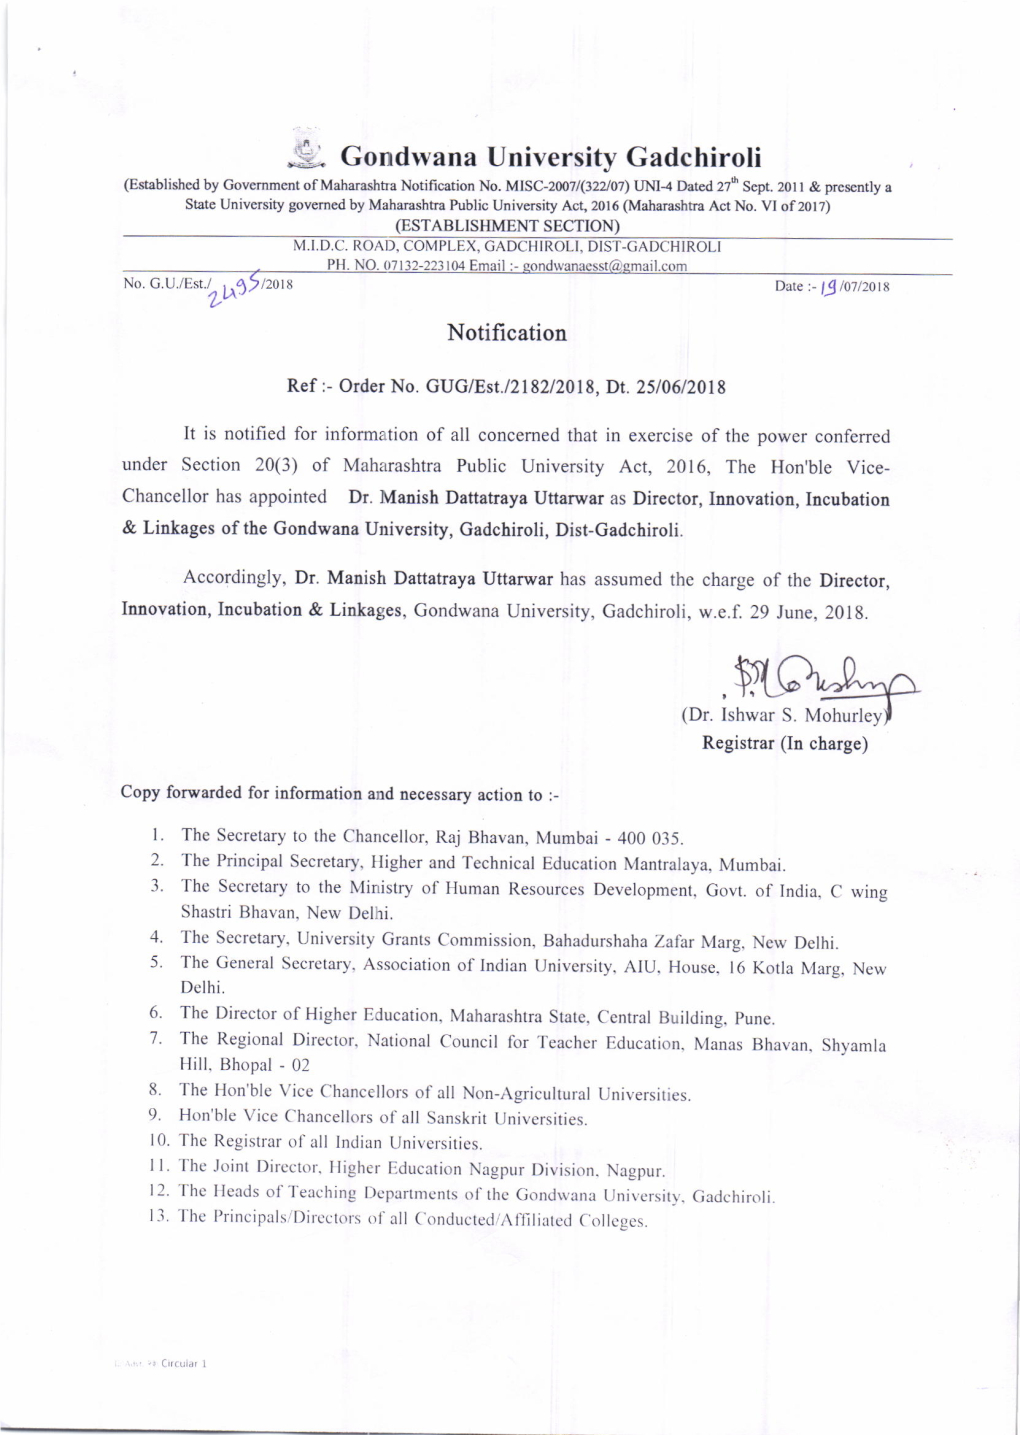 €. Gondwana University Gadchiroli (Established by Govemment of Maharashtra Notification No